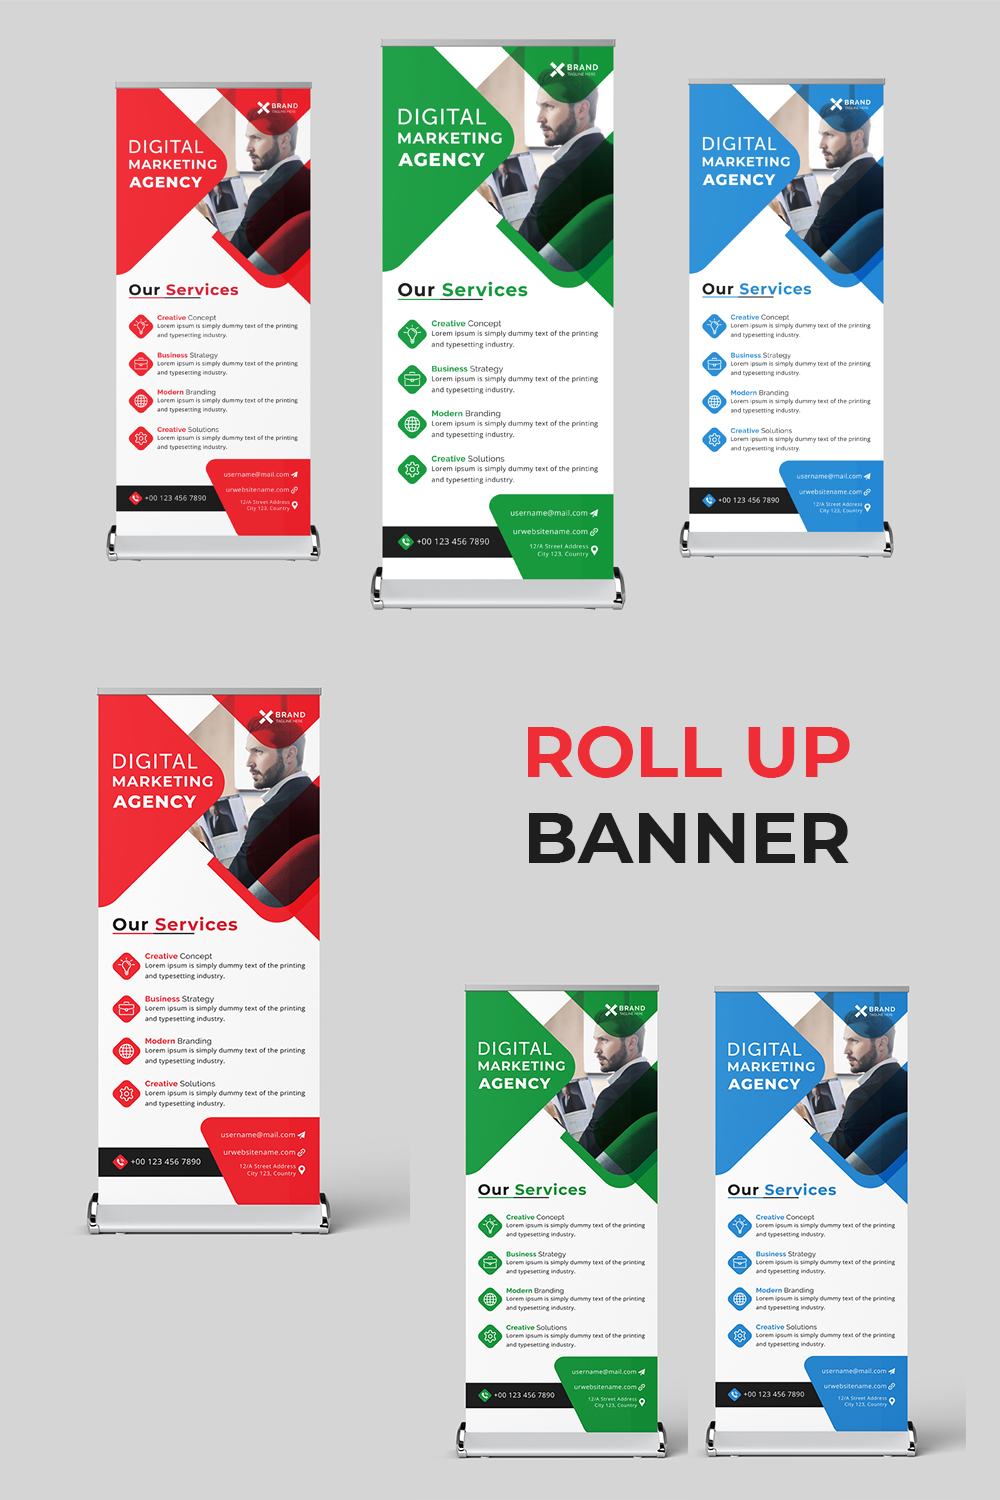 Digital Marketing Agency Roll Up Banner Design Template pinterest preview image.